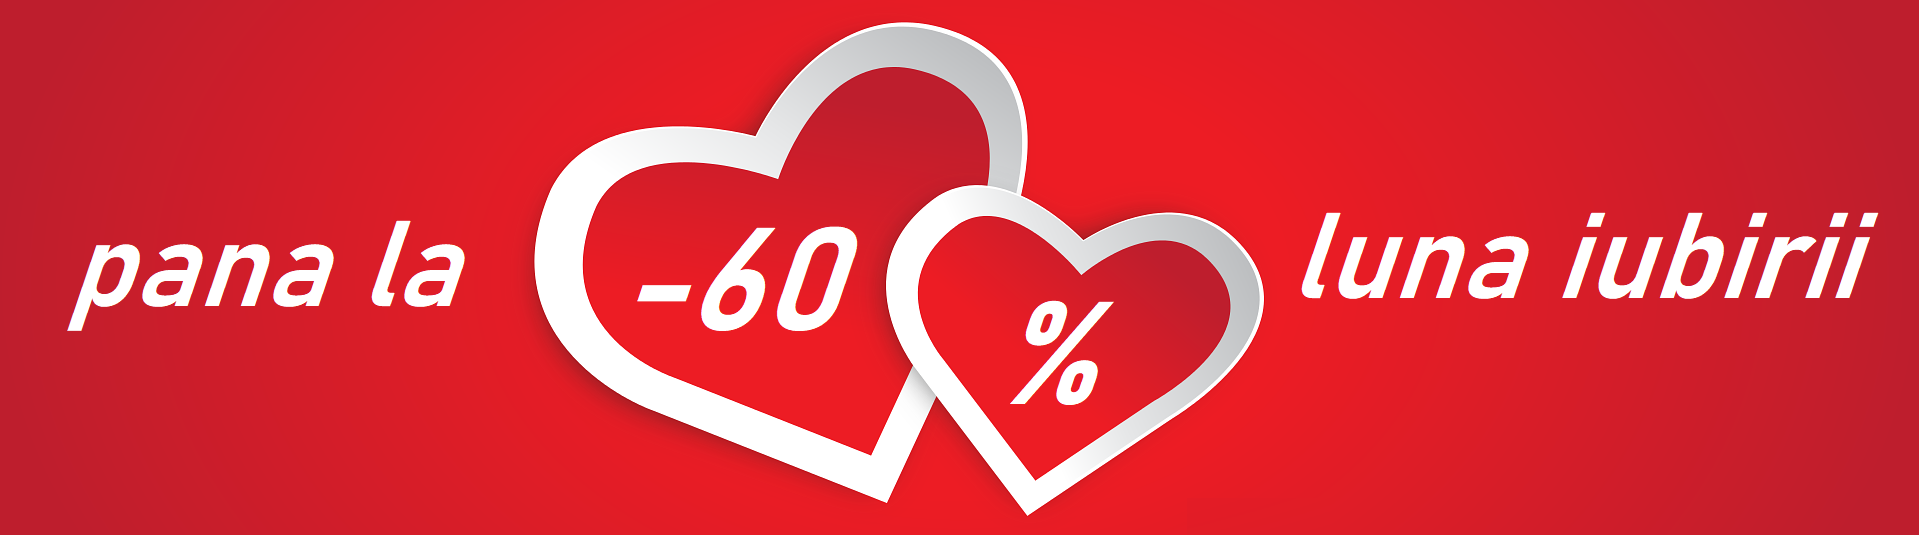 pana la -60% in luna iubirii!